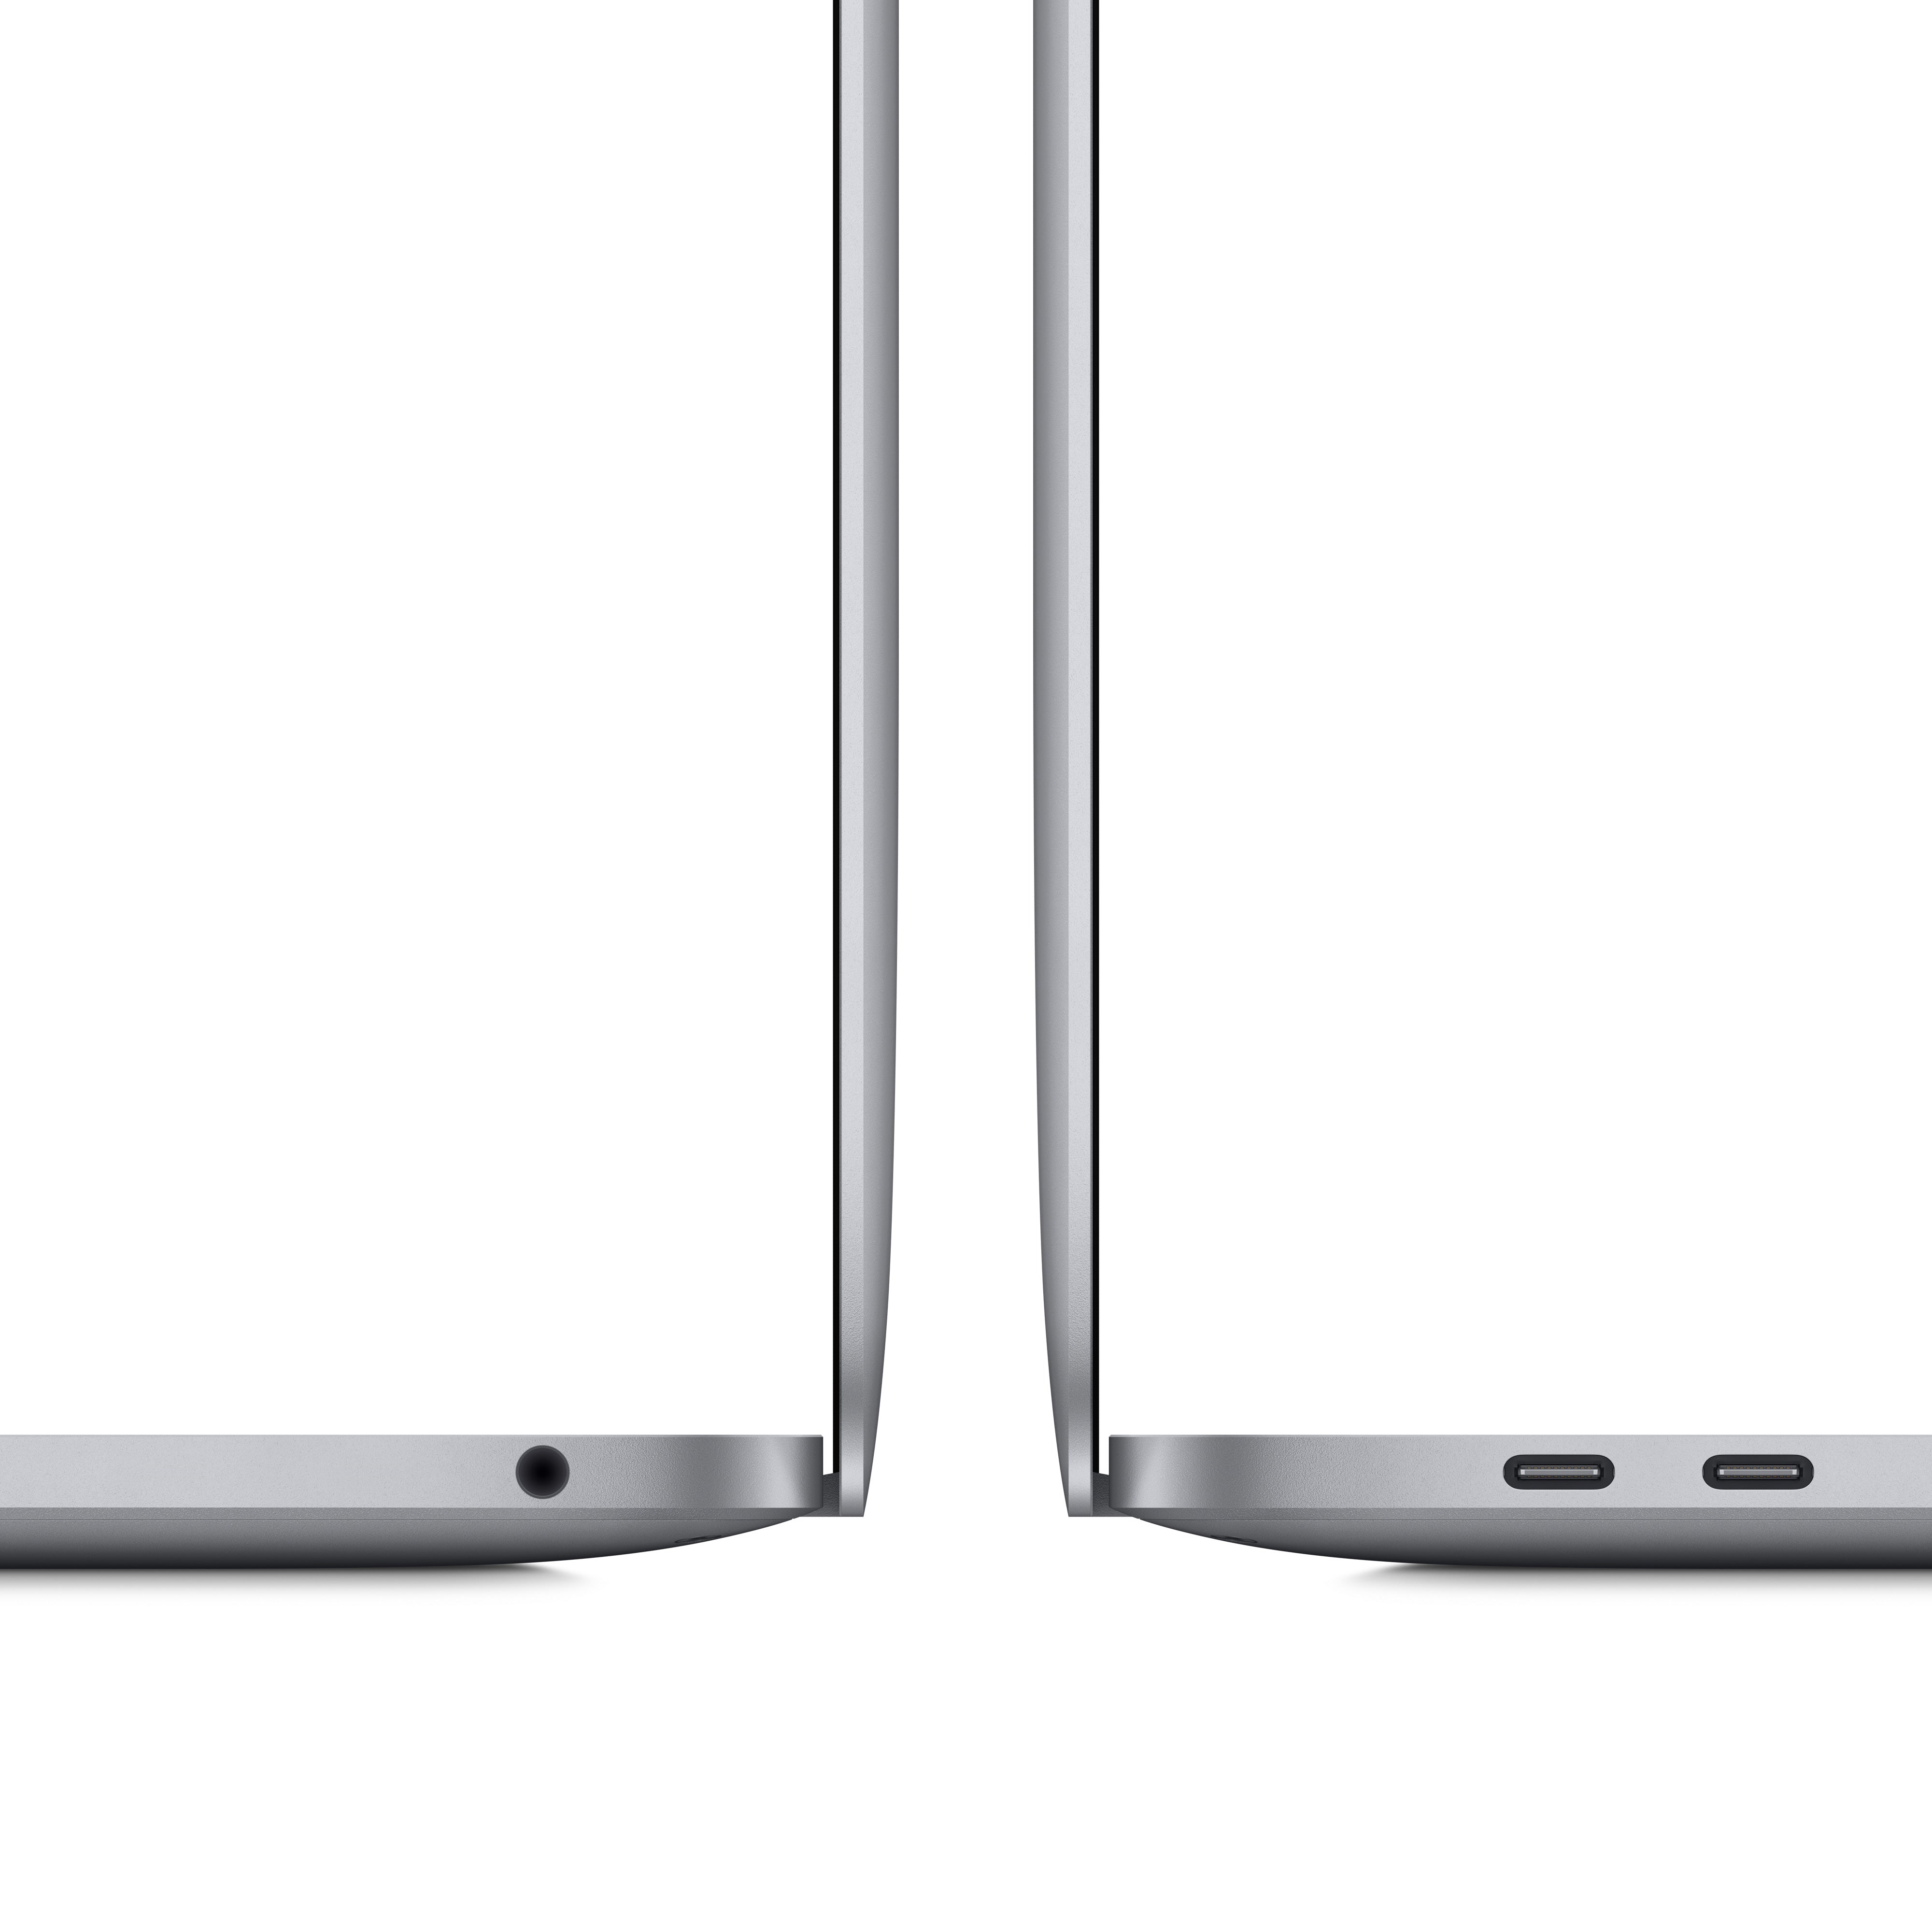 MacBook Pro (M1, 13-inch)